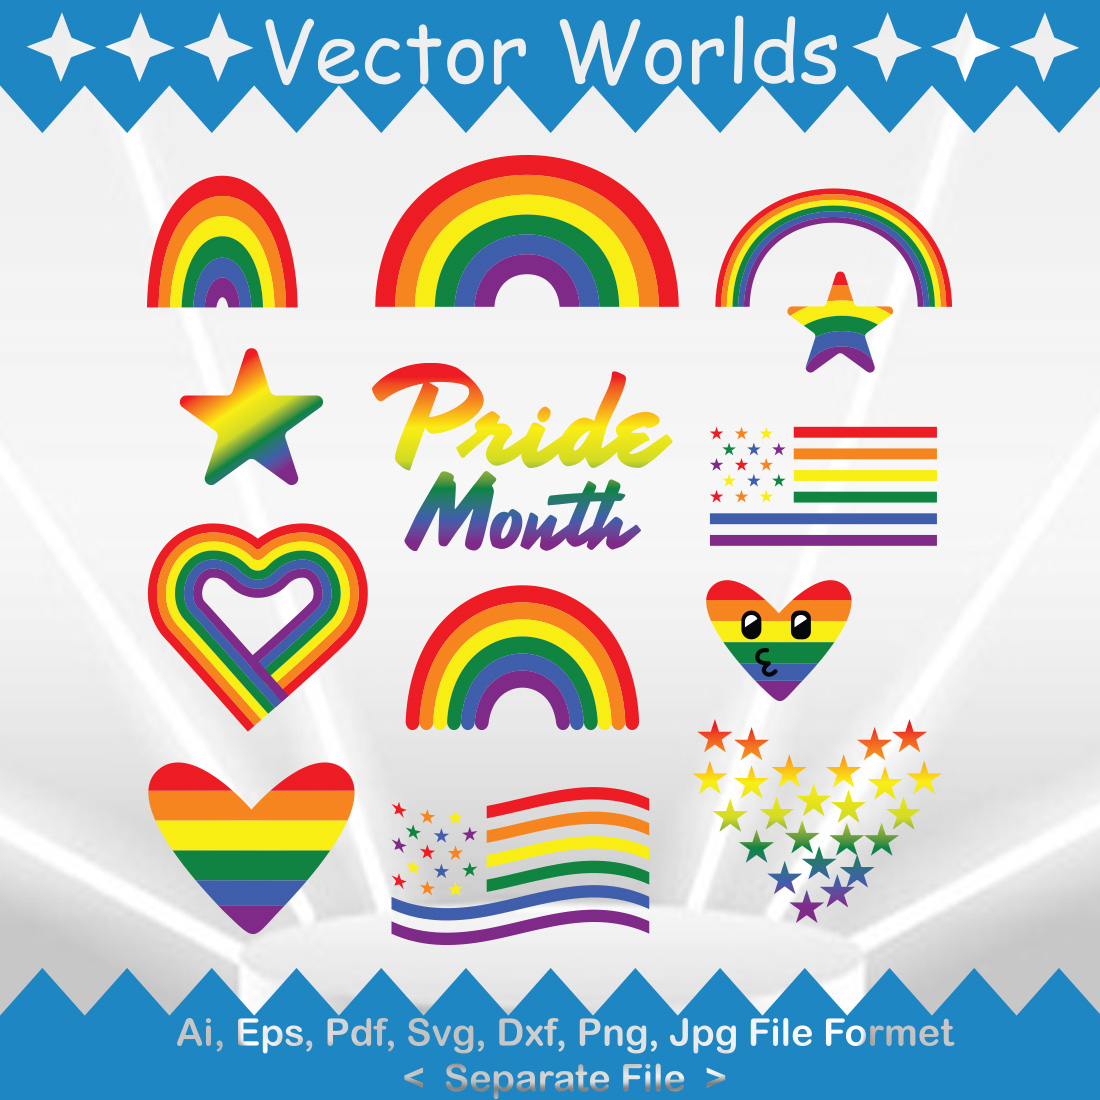 LGBT SVG Vector Design cover image.